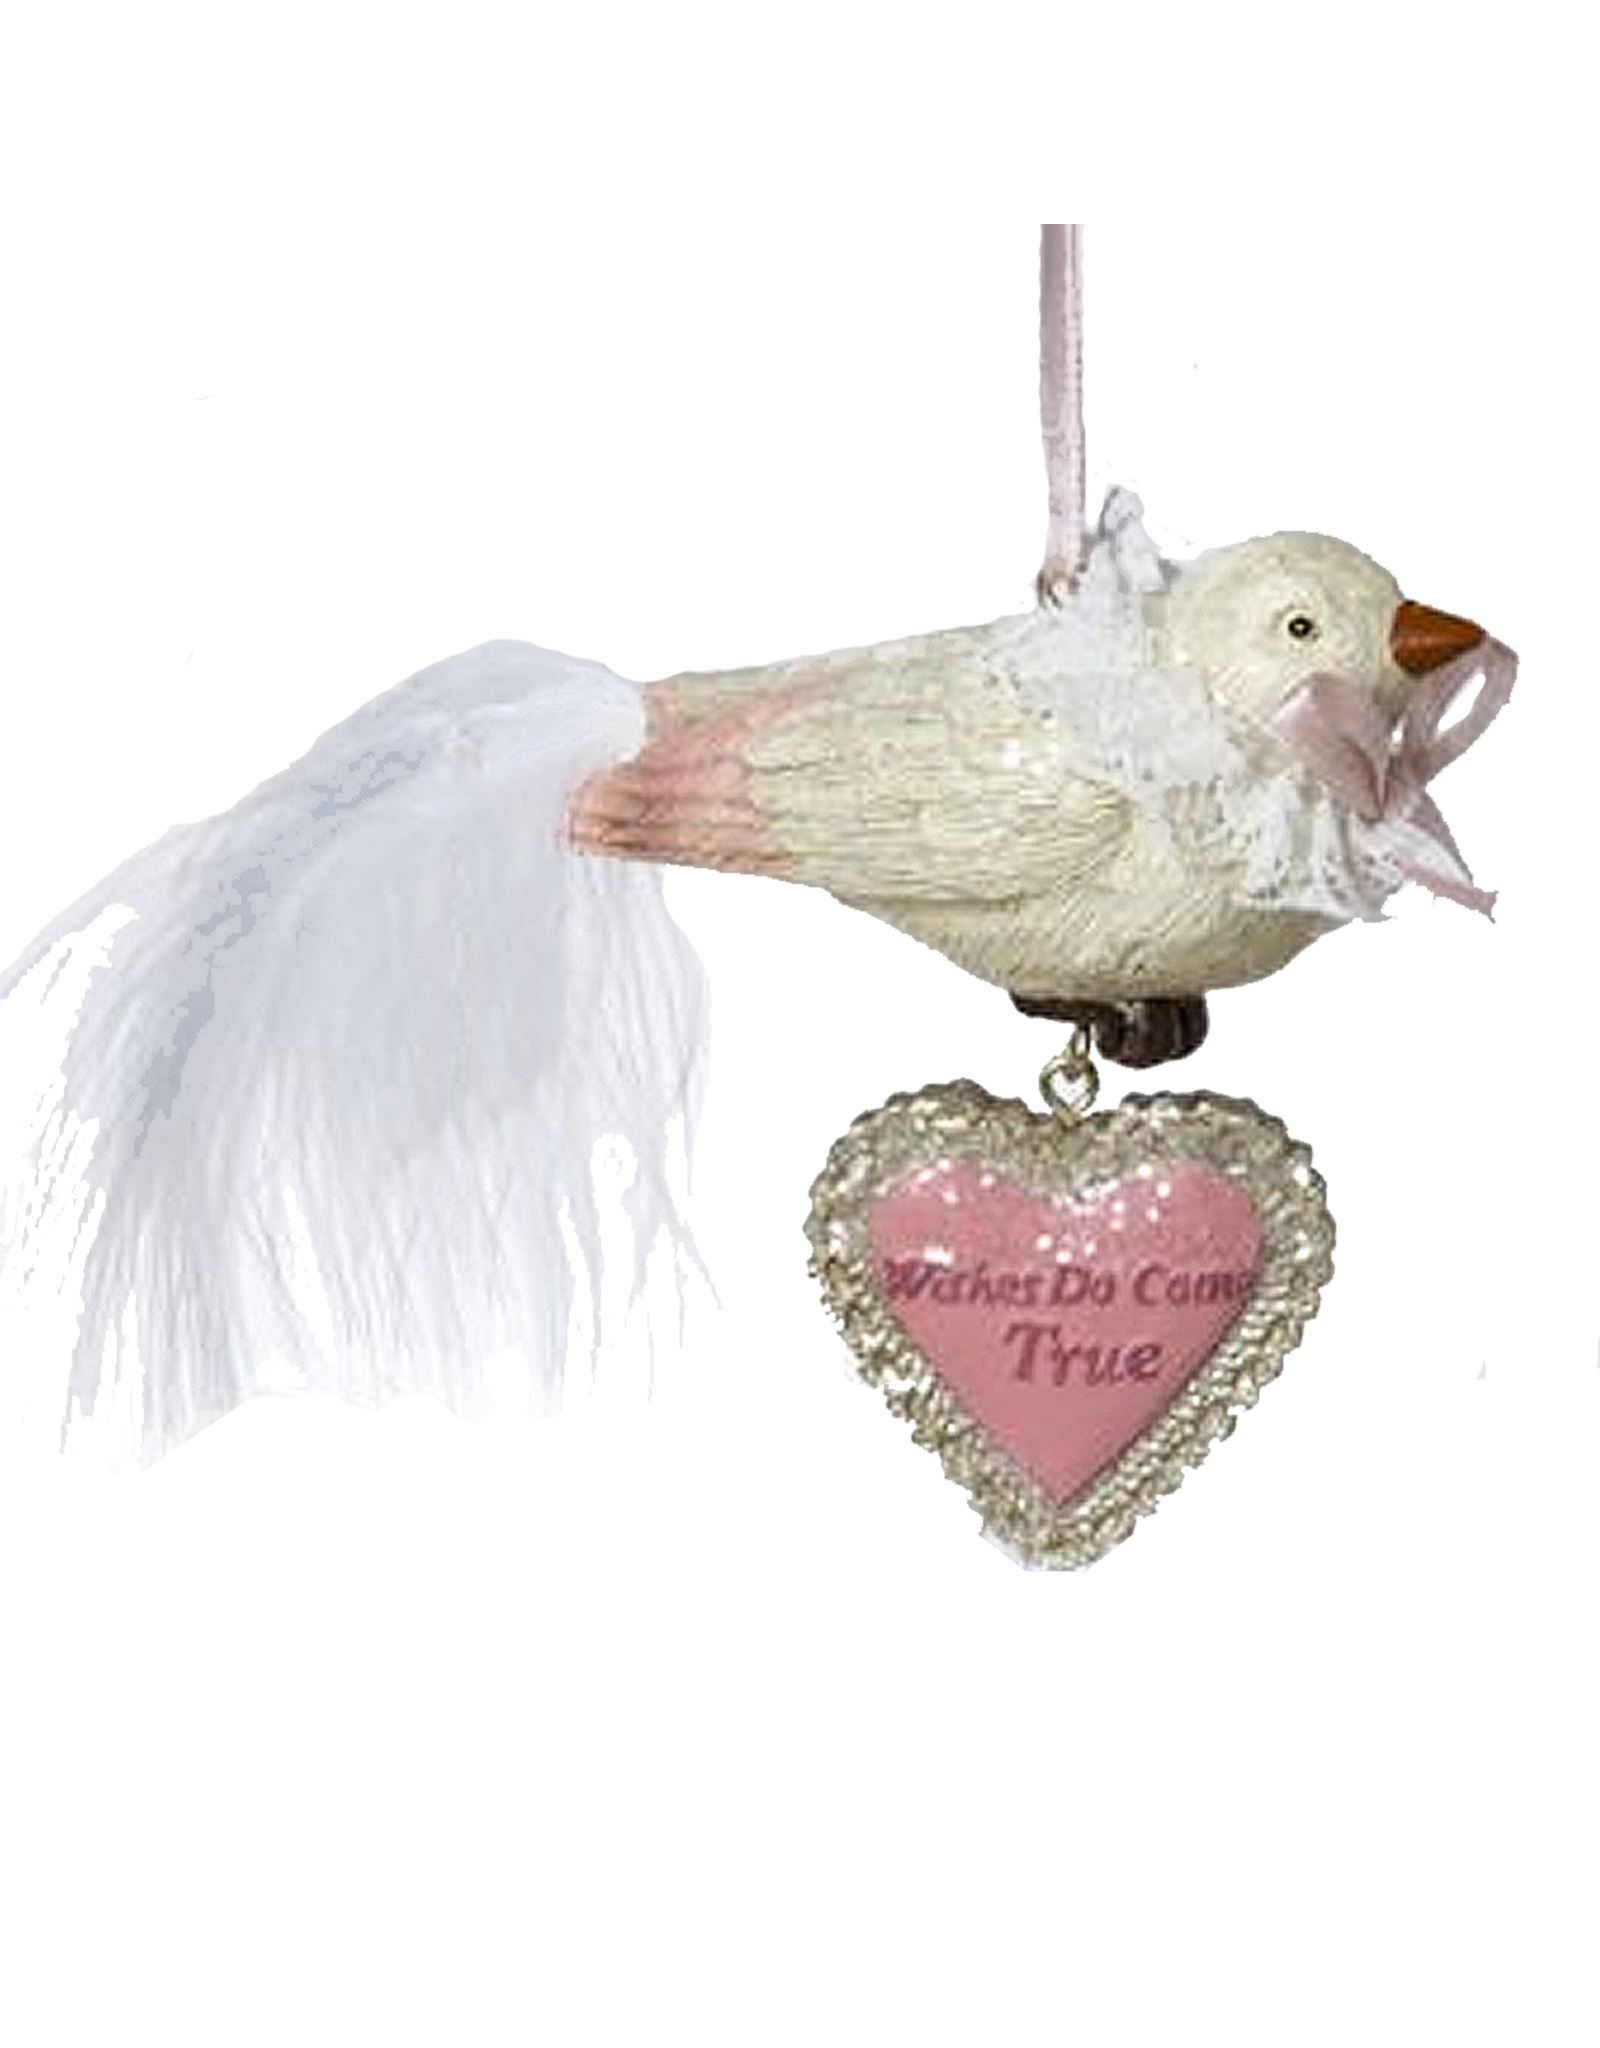 Kurt Adler Love Birds Heart Ornament W Sentiment Wishes Do Come True